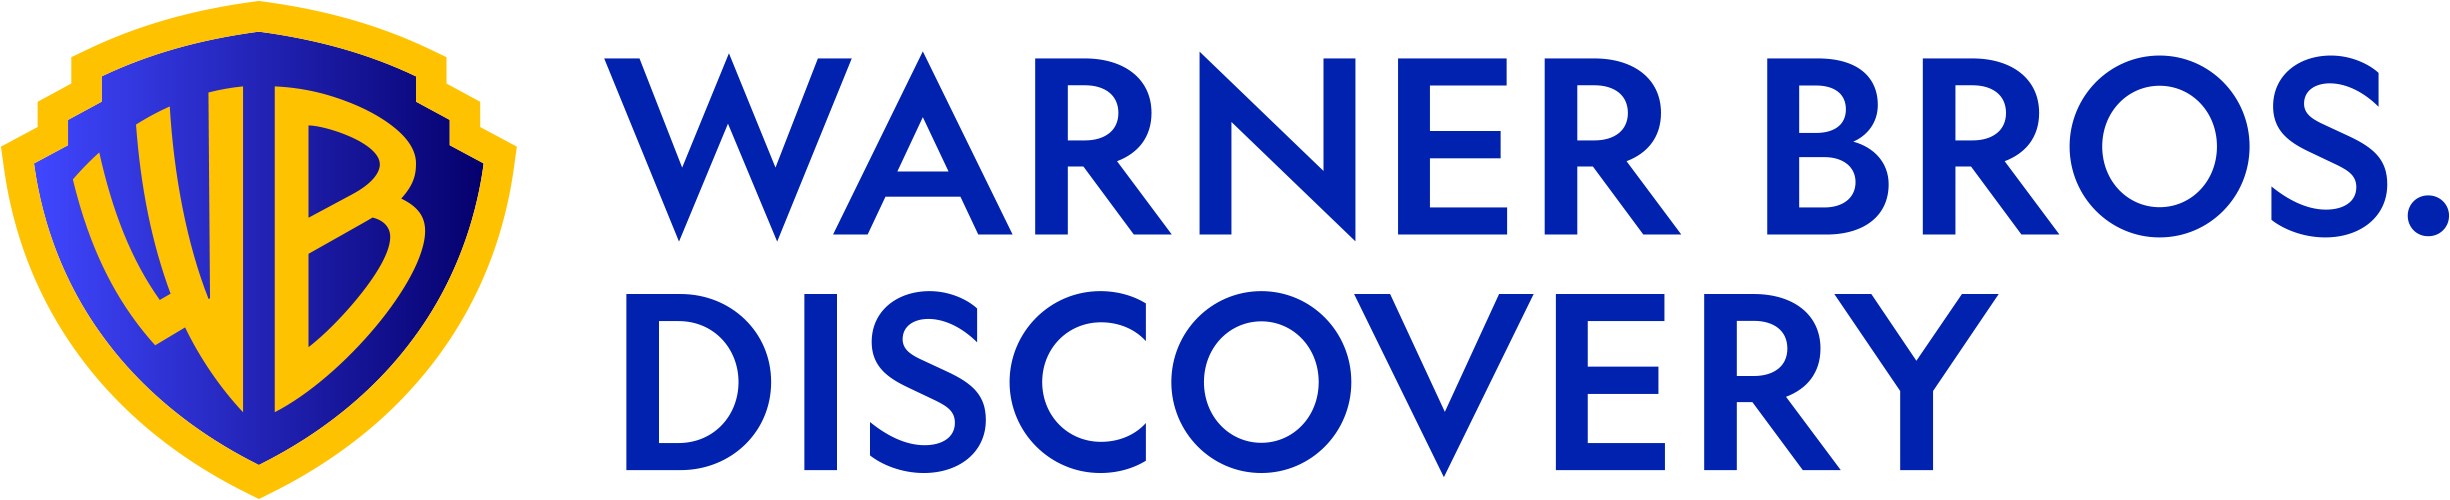 Warner Bros. Discovery InSites logo